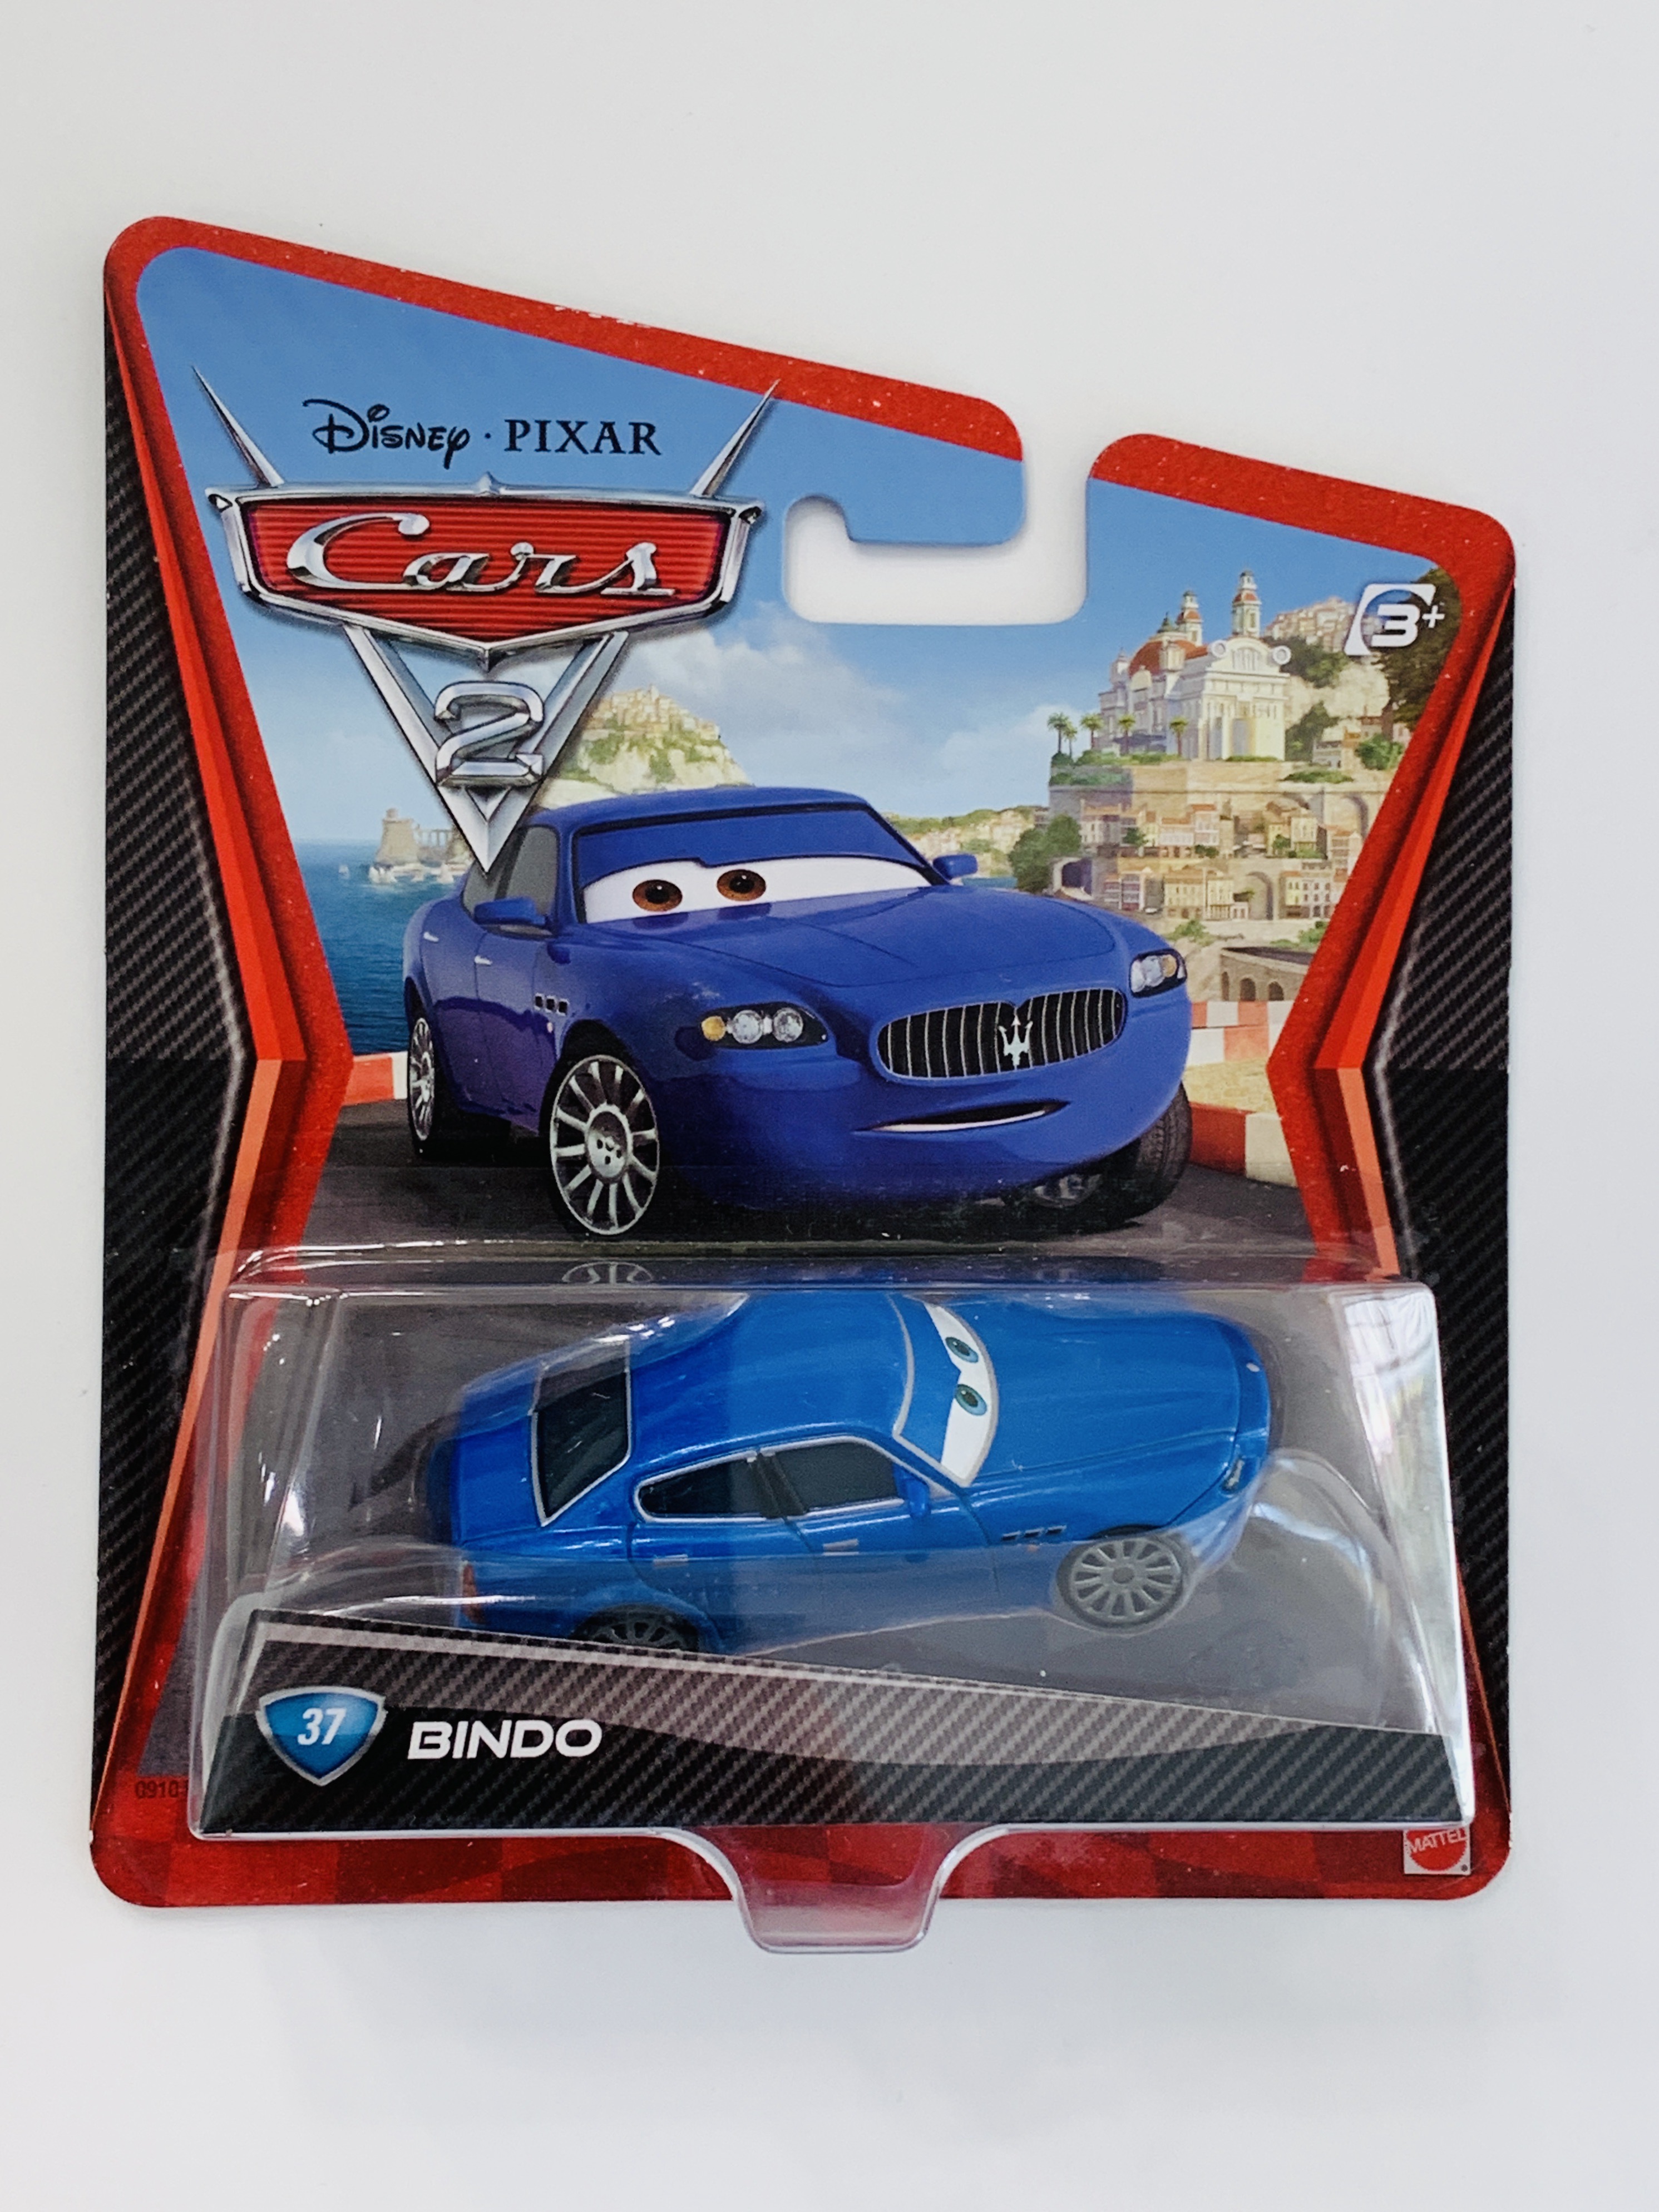 Disney Pixar Cars Bindo